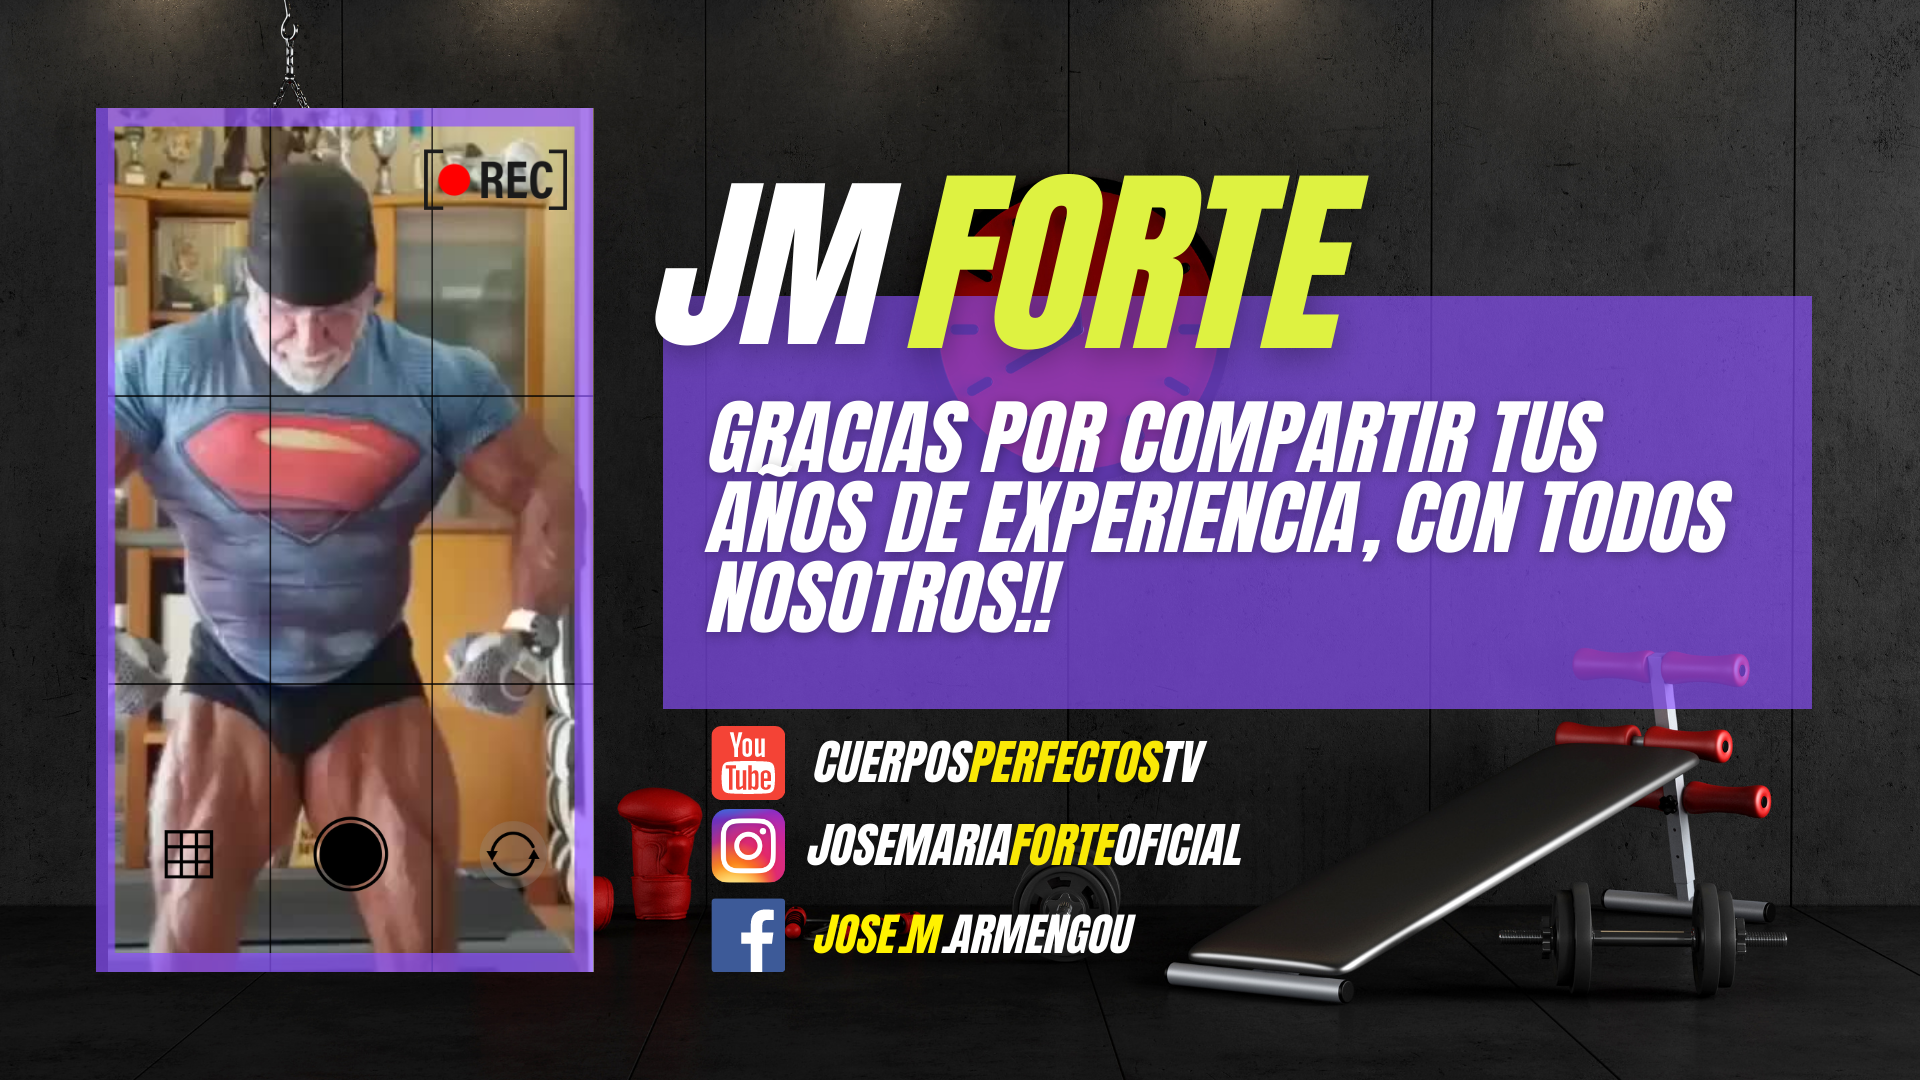 Imagen en honor a JM Forte